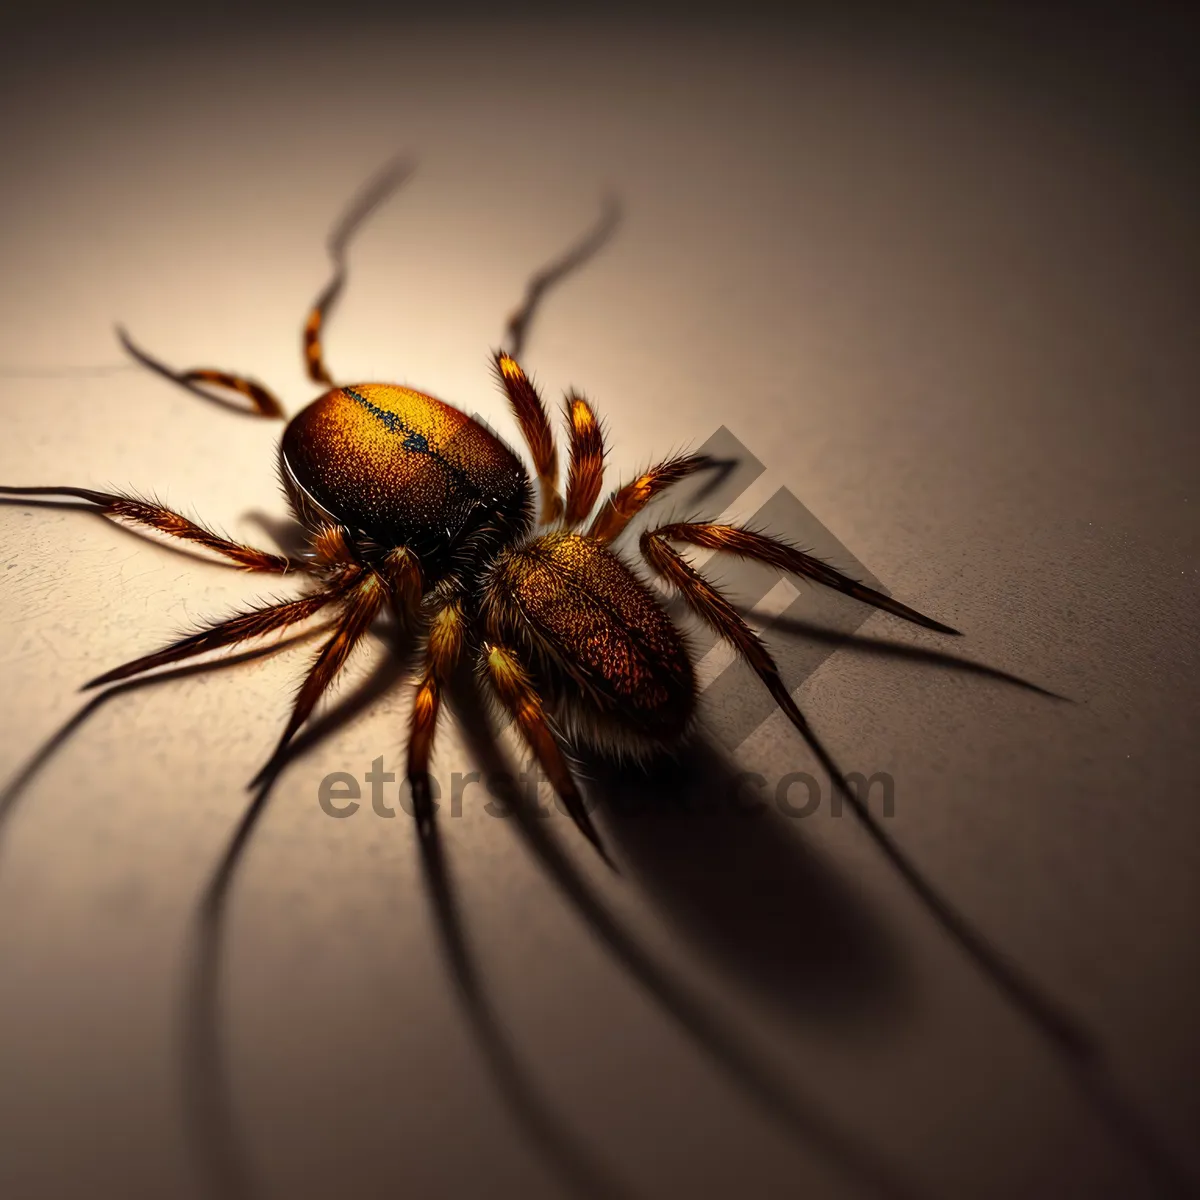 Picture of Garden Spider Web Close-Up: Creepy Arachnid Detail